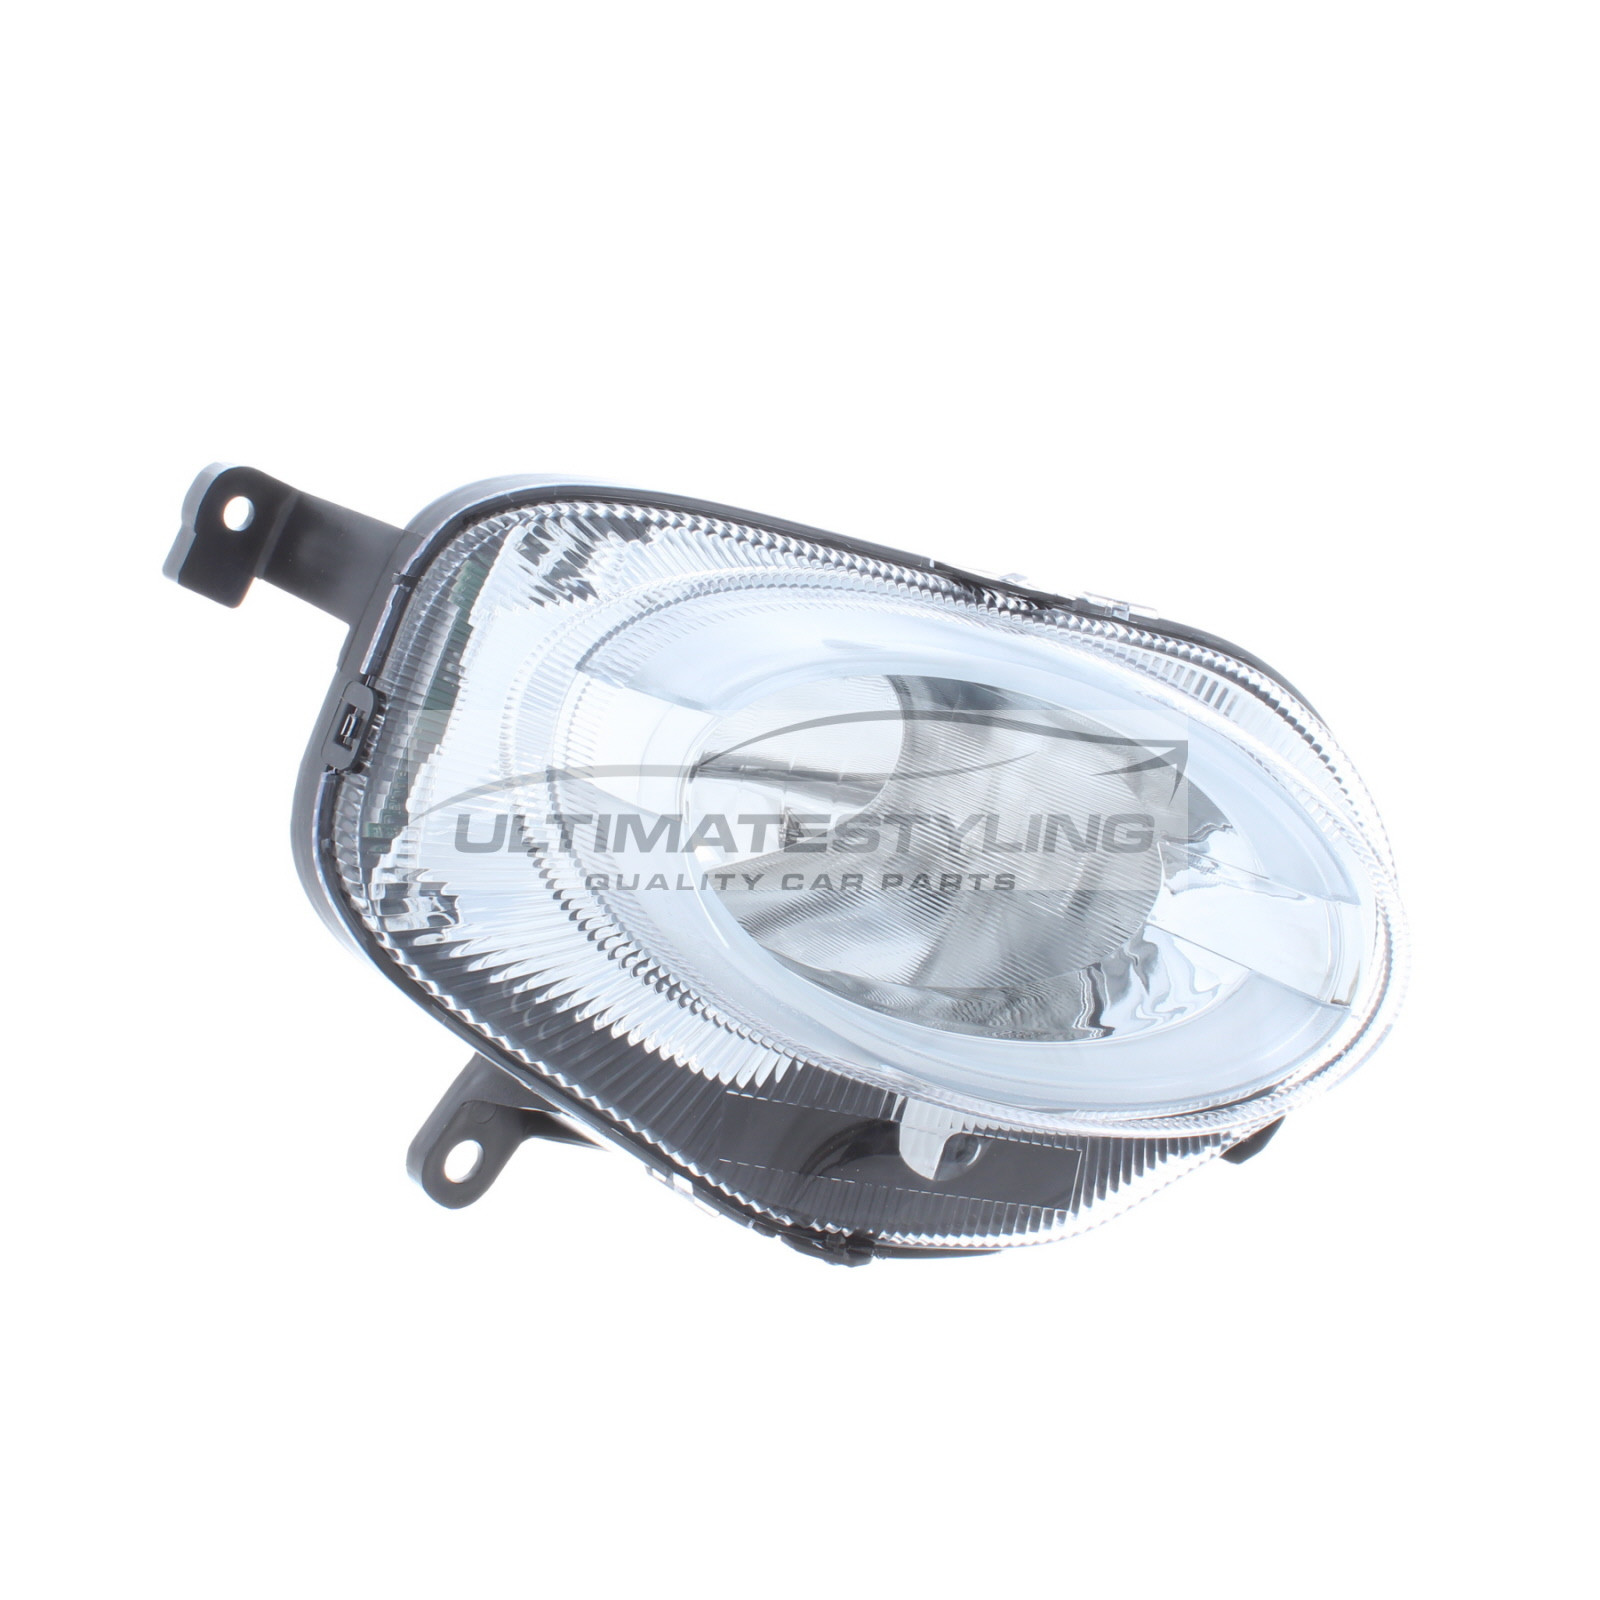 Headlight / Headlamp for Fiat 500